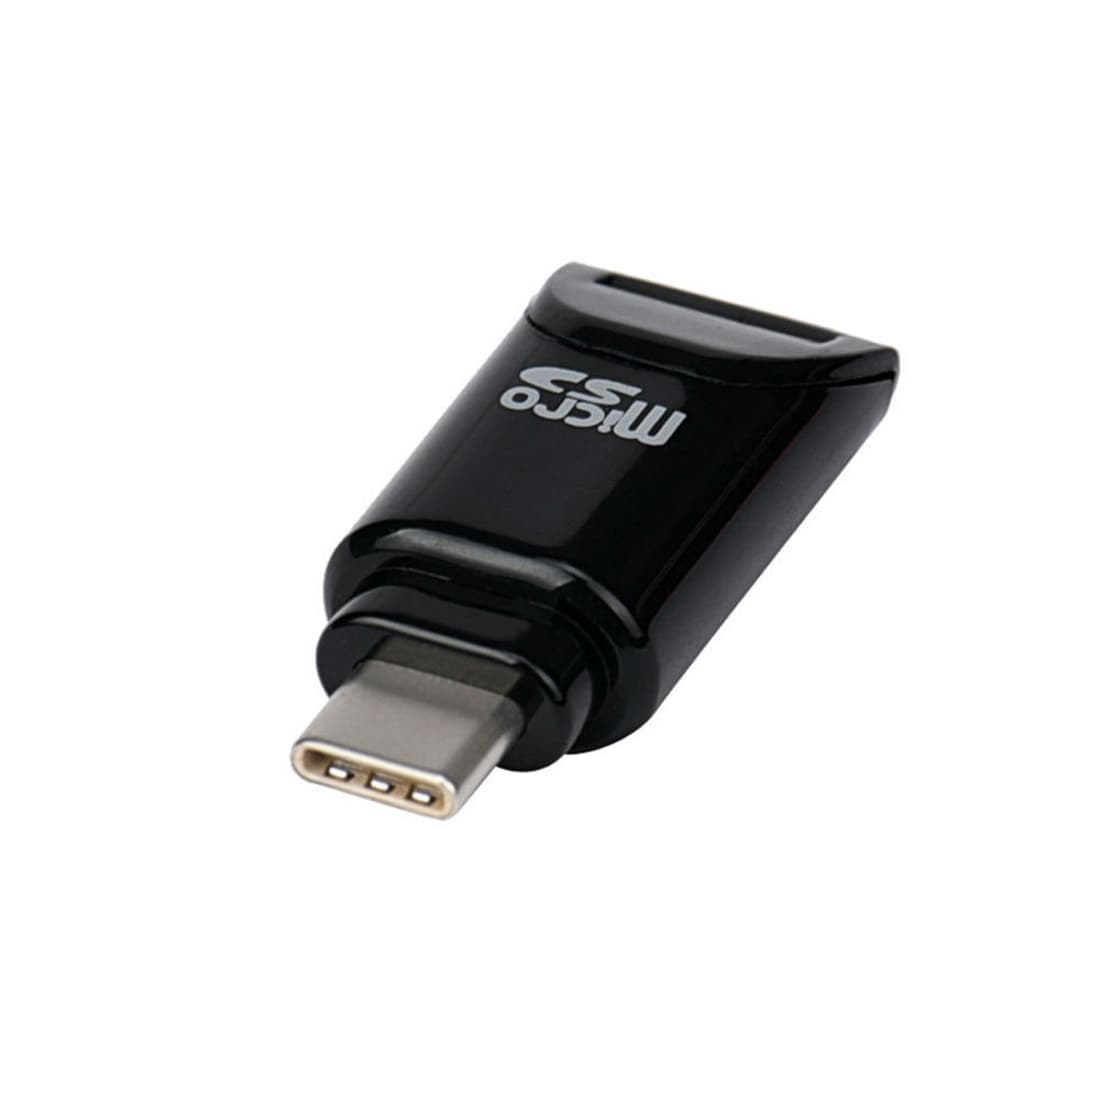 Kortinlukija USB-C Tyypi-C Micro SD OTG